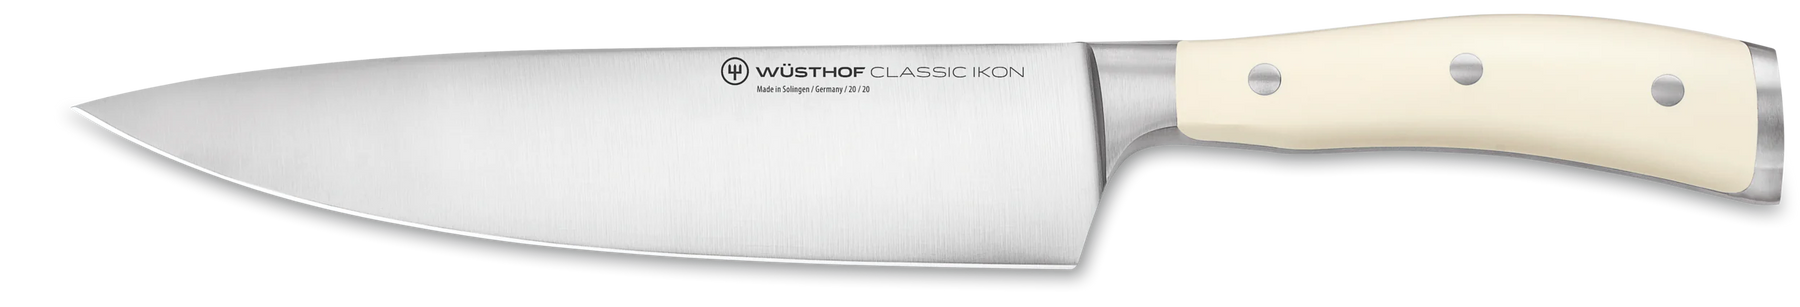 Wusthof Classic Ikon Crème 8